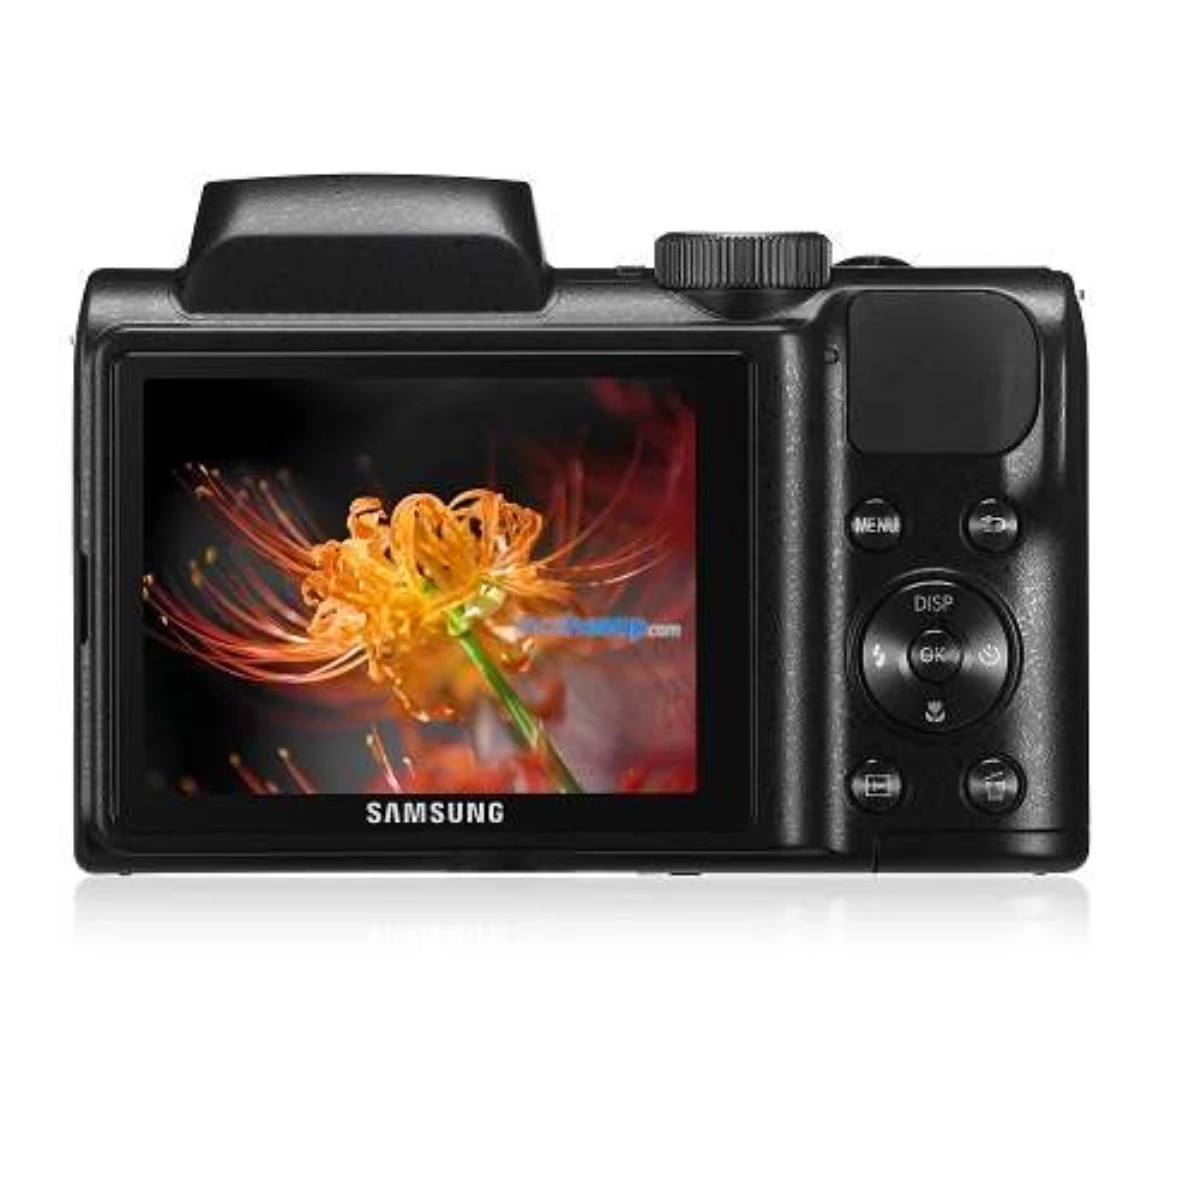 Samsung Dfm Wb100 Dijital Fotoğraf Makinesi